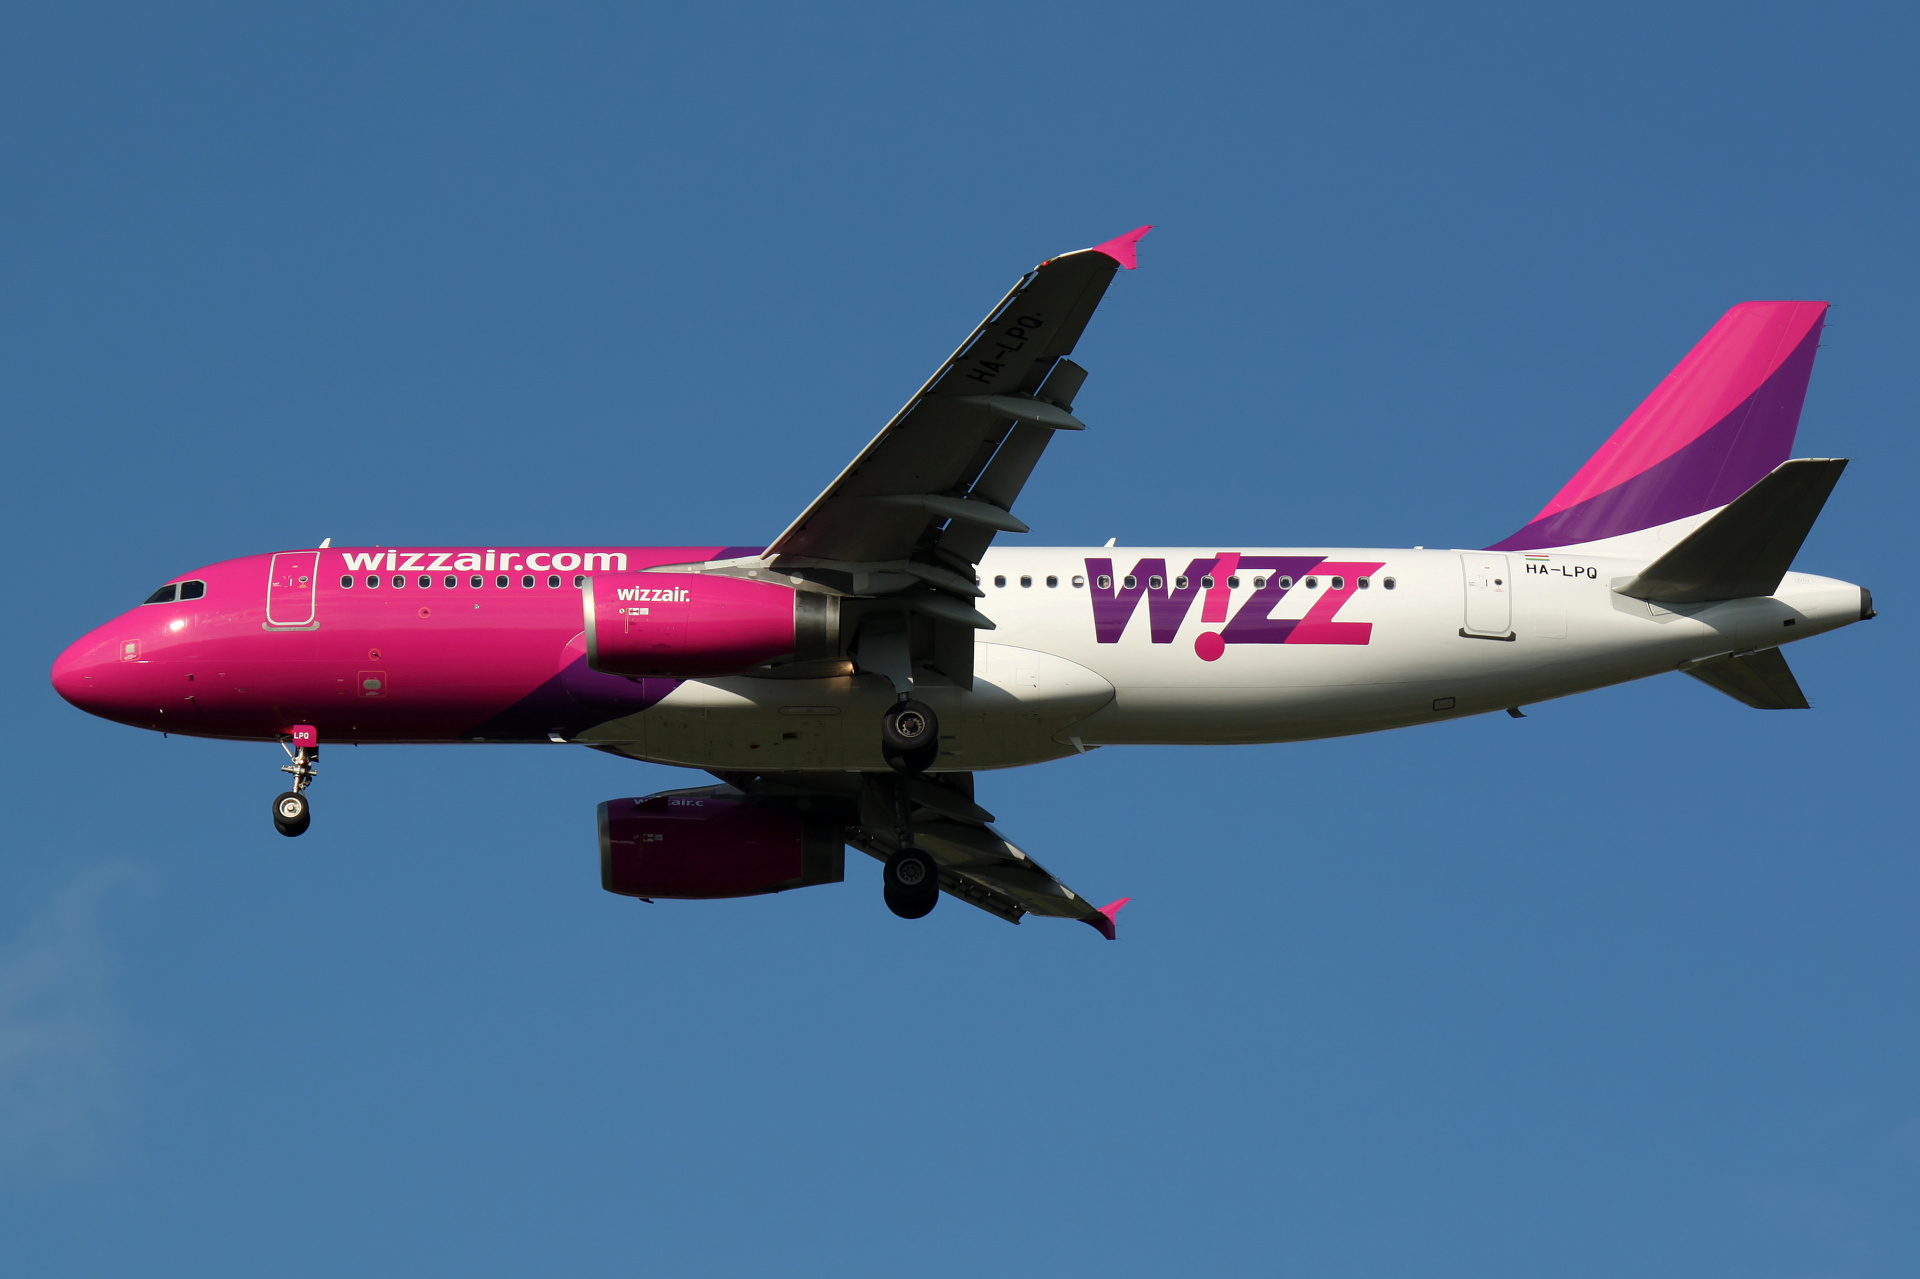 HA-LPQ (Aircraft » EPWA Spotting » Airbus A320-200 » Wizz Air)